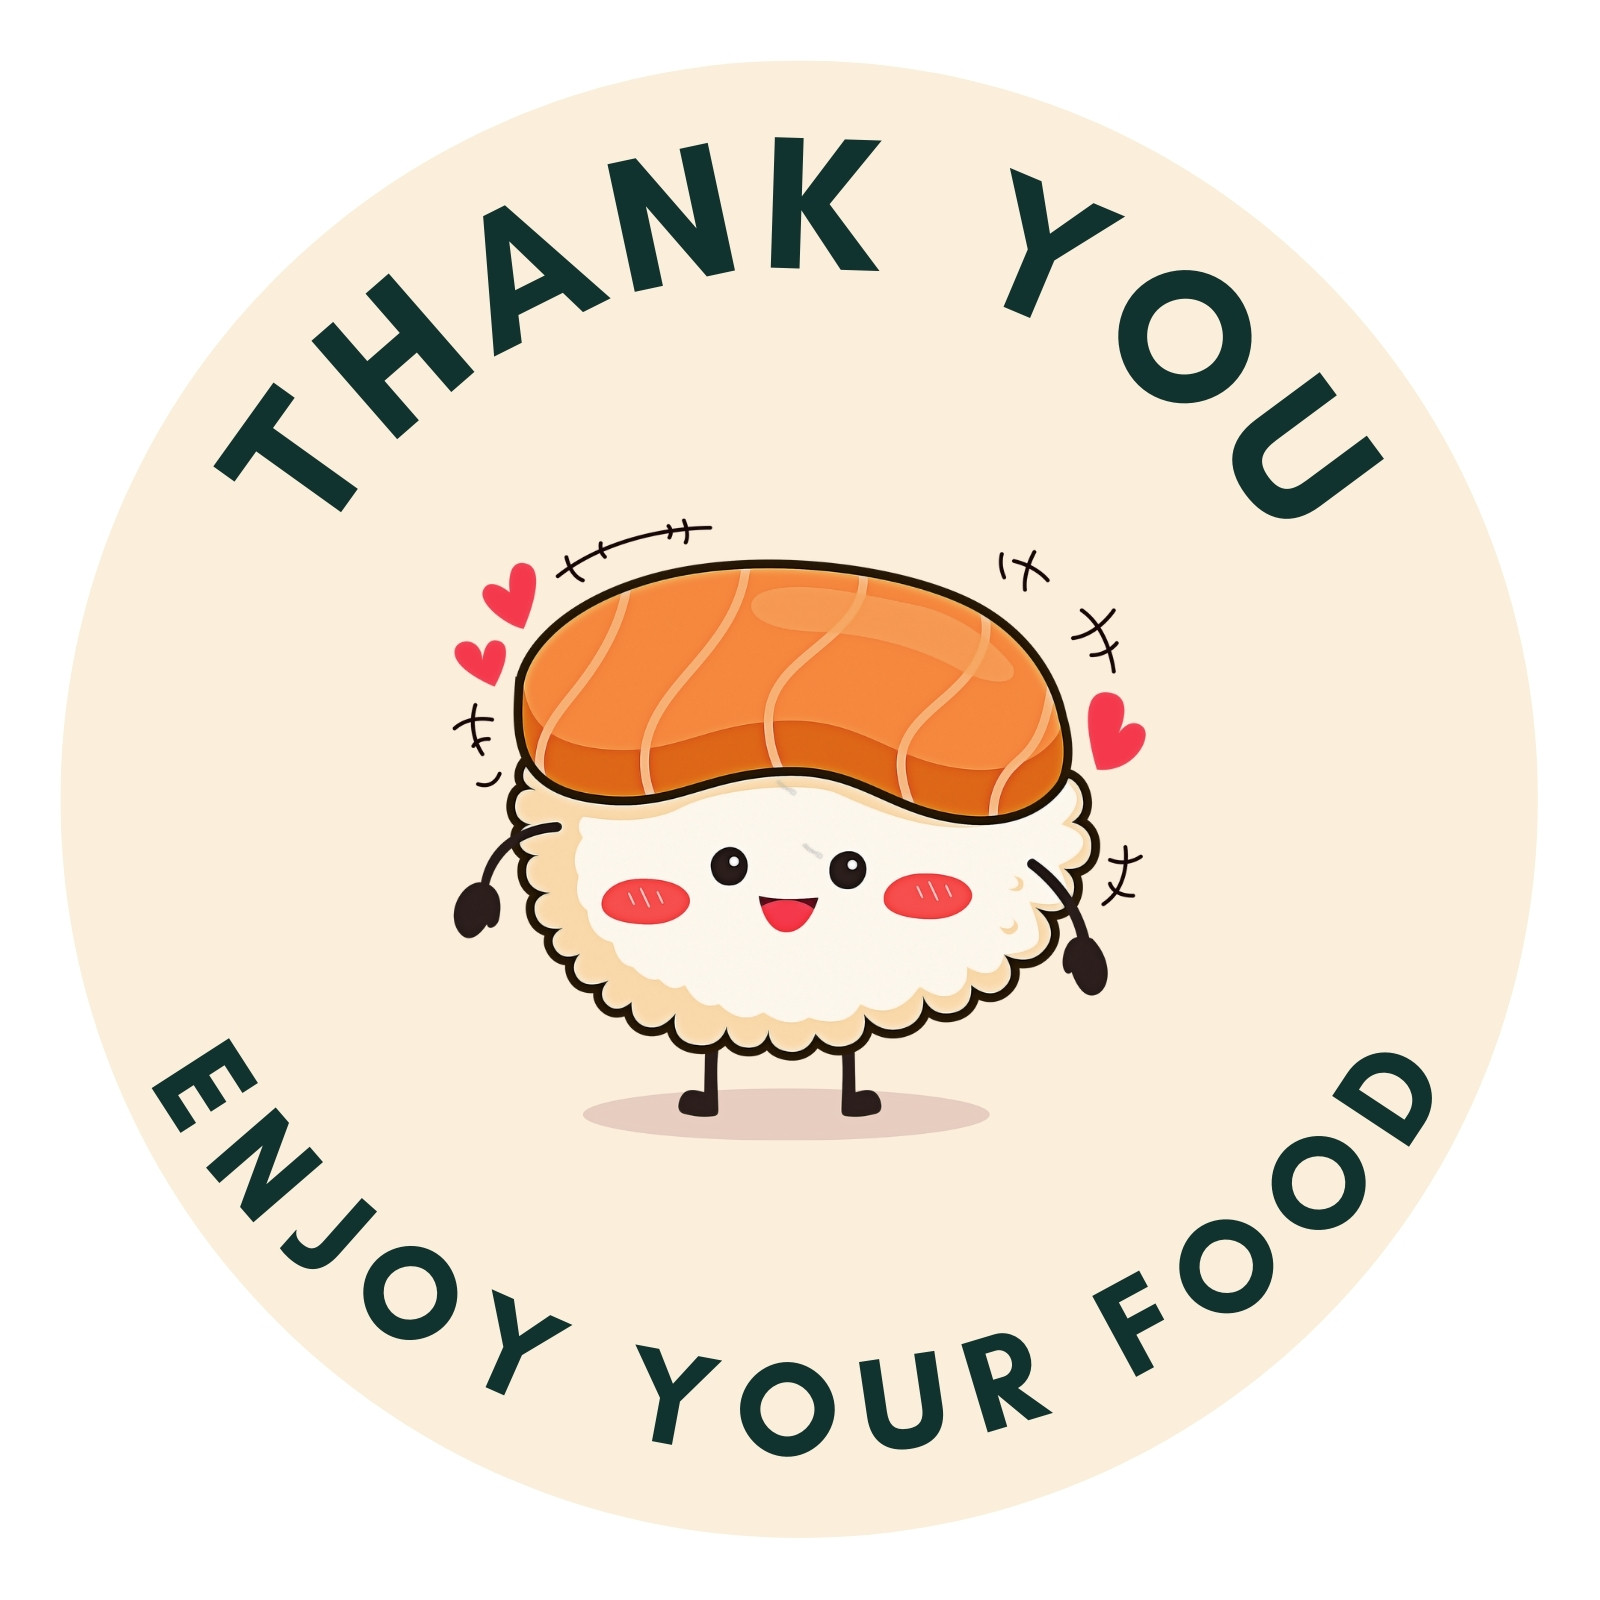 Customize 547+ Food Sticker Templates Online - Canva